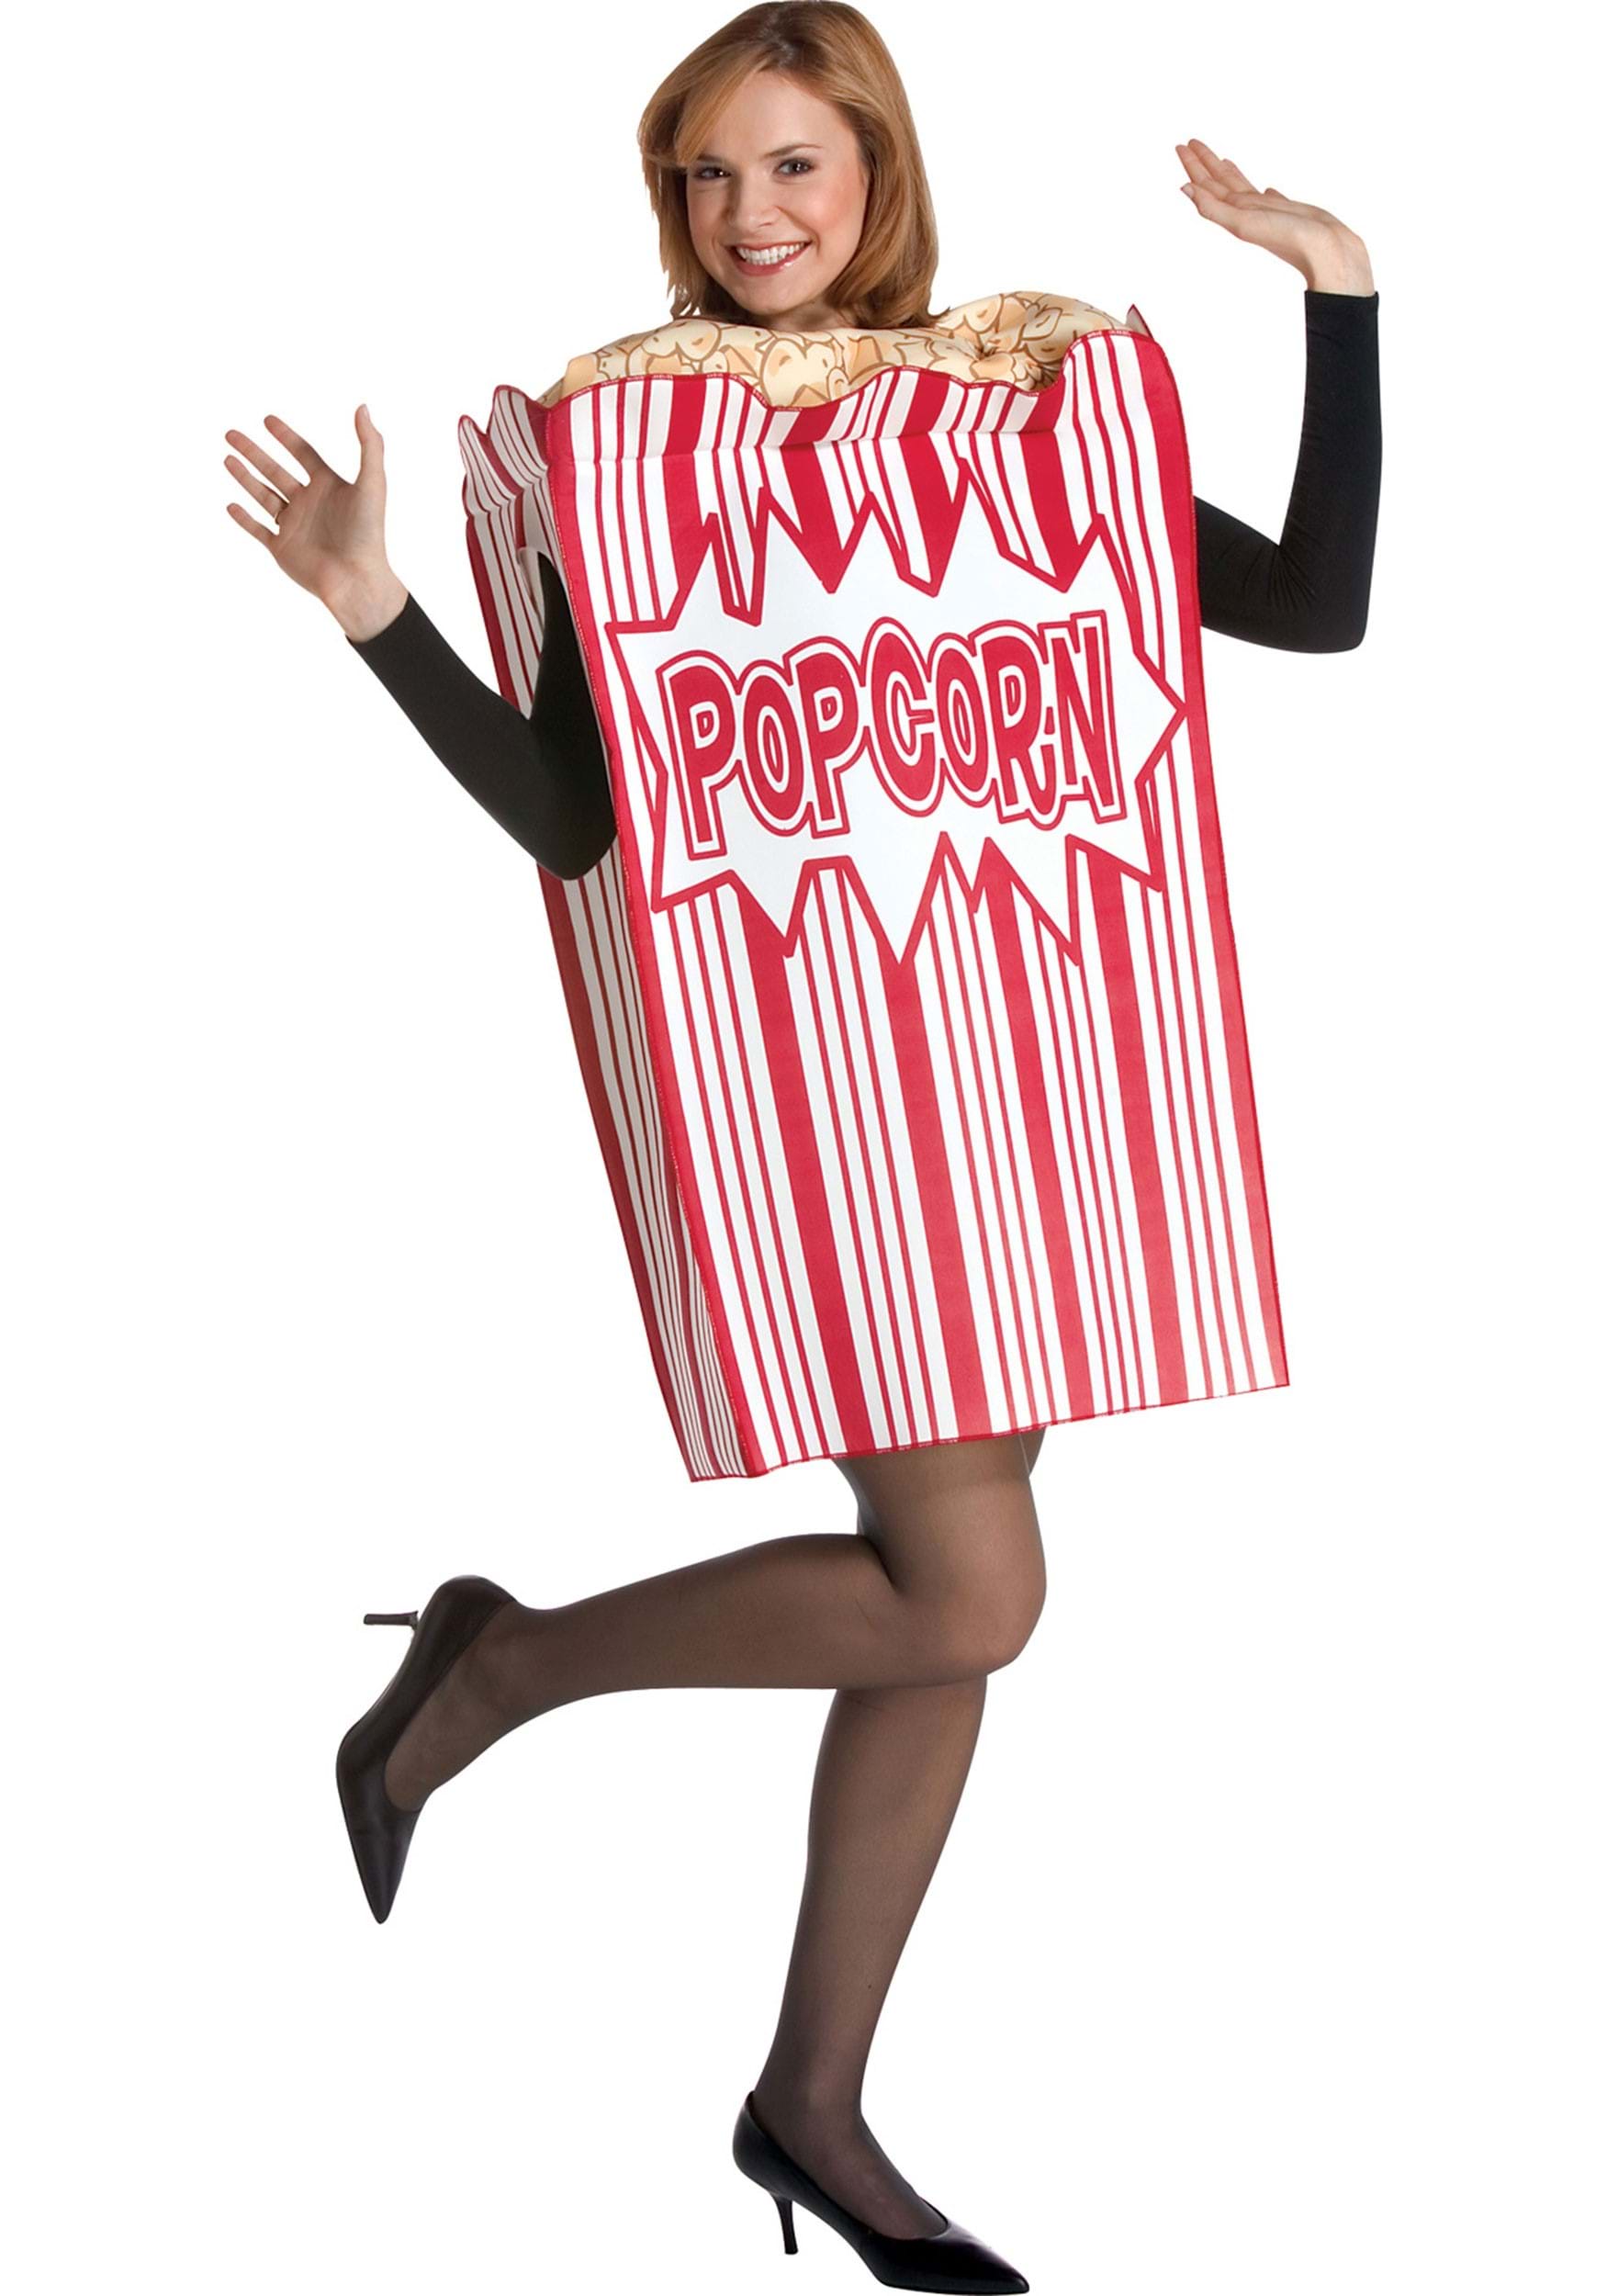 Movie Night Popcorn Adult Costume